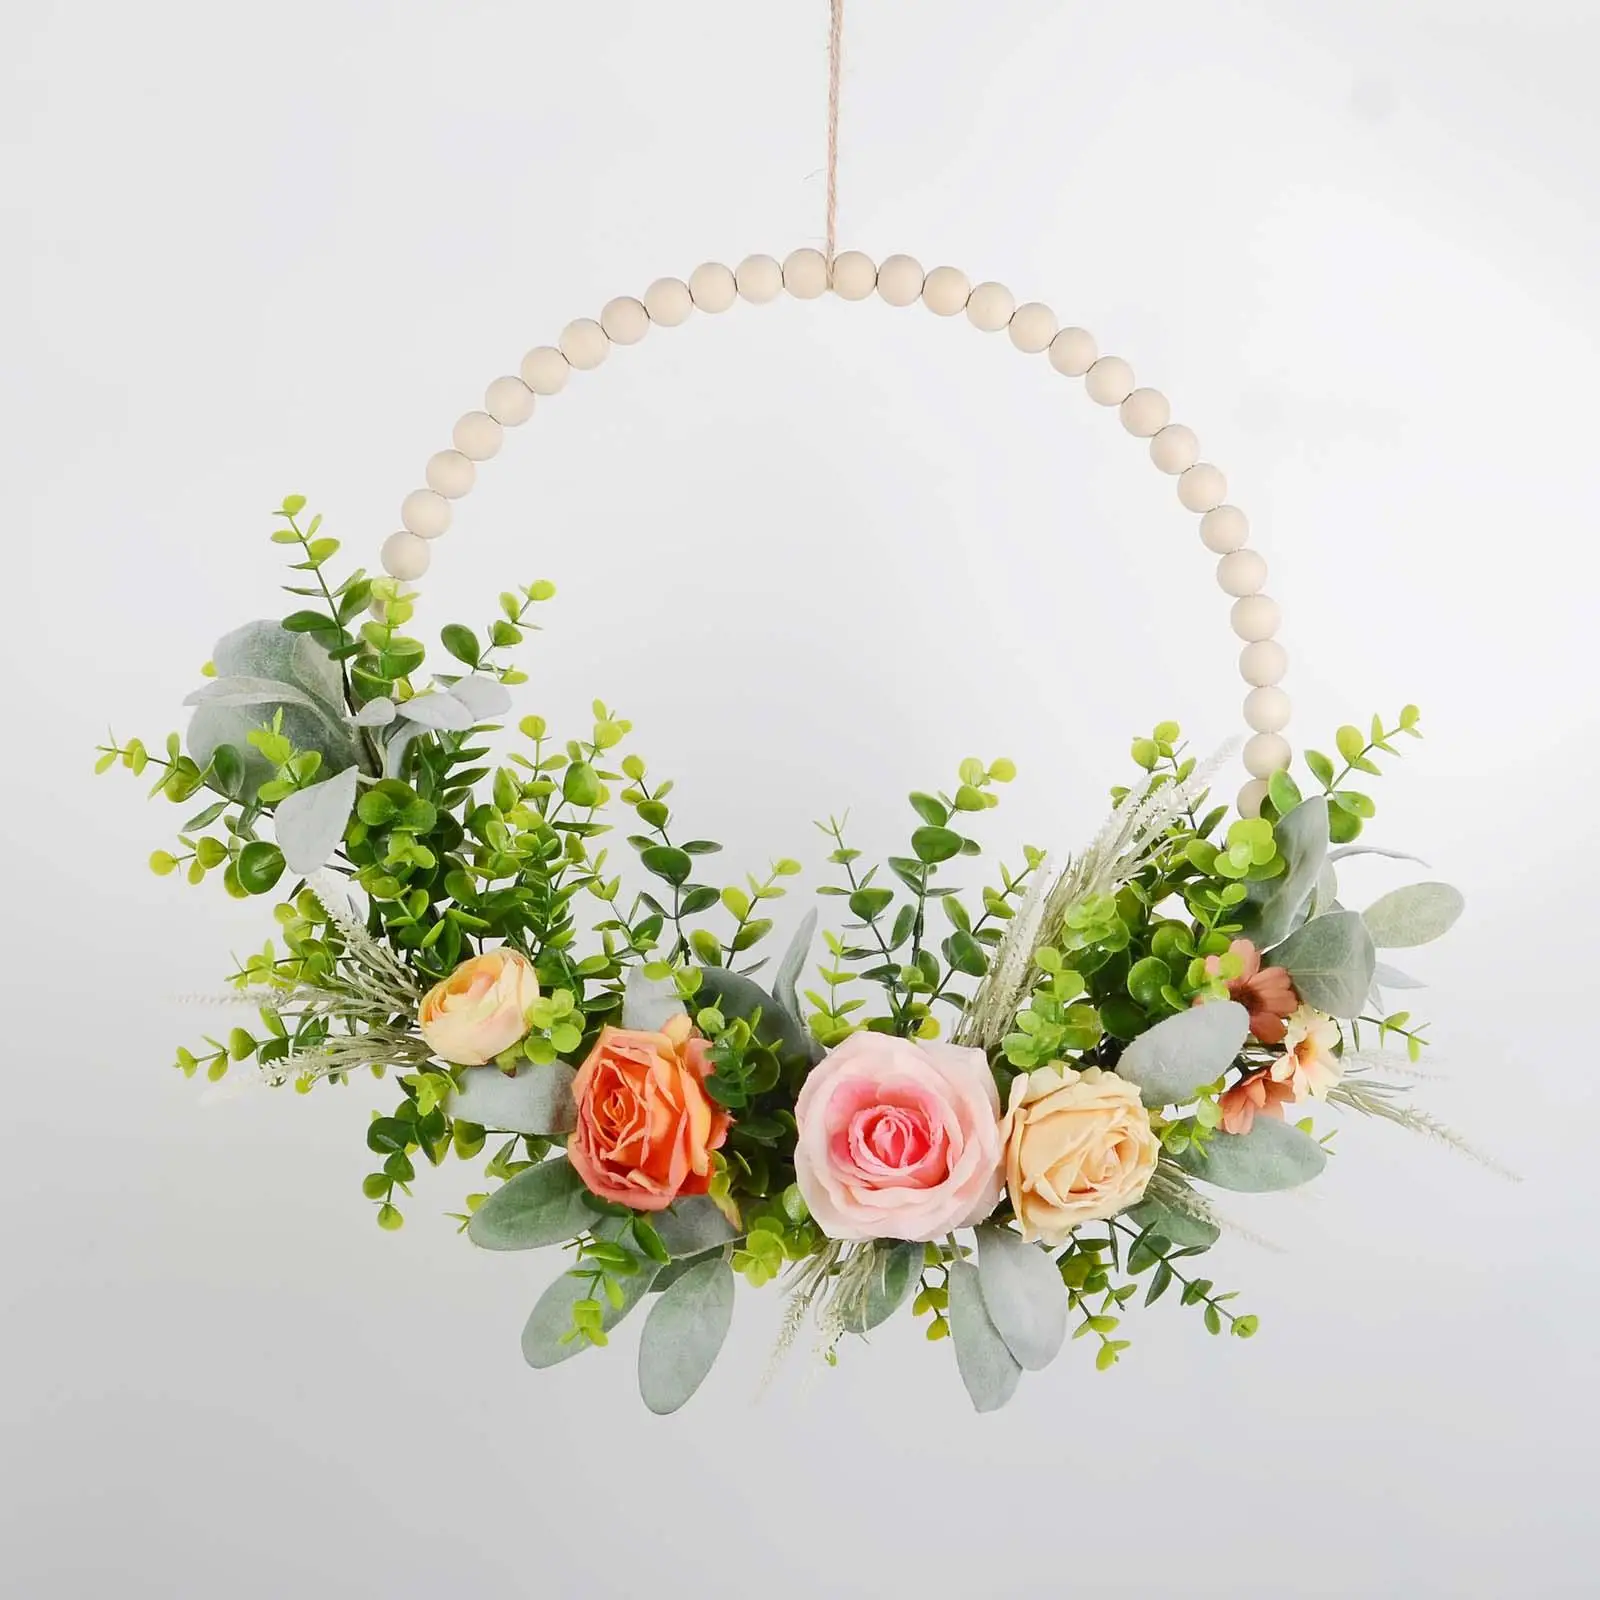 Nordic Artificial Wood Bead Wreath, Flower Garland Decorations Door Creative Indoor Floral Hoop for Spring Weddidng Backdrop